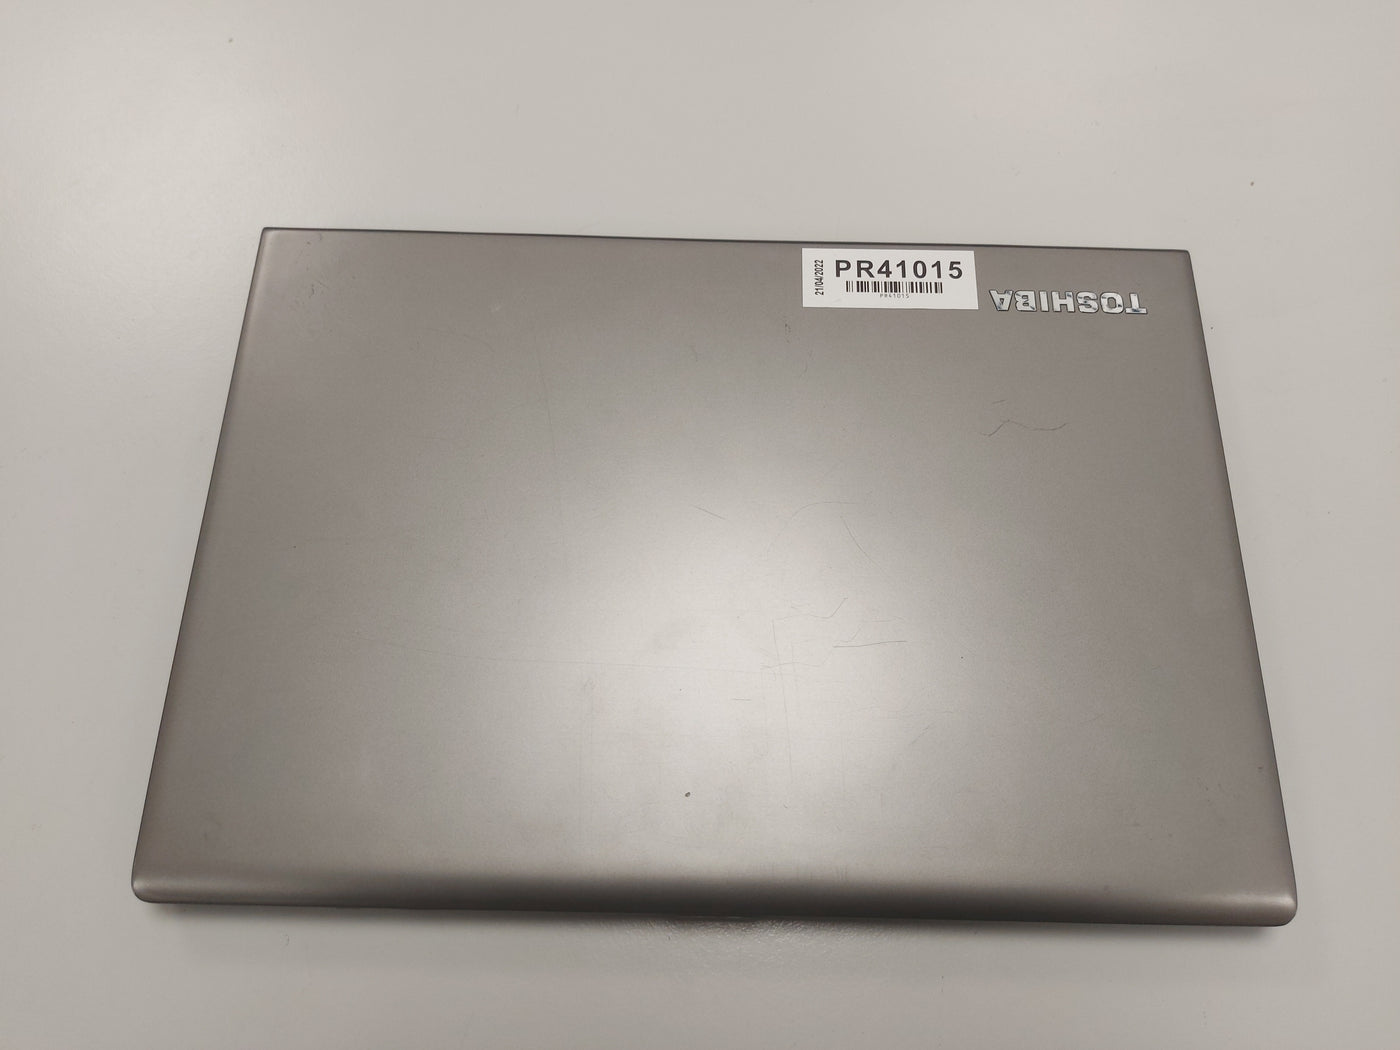 Toshiba Tecra Z40-B-104 320GB HDD Core i3-5005U 2000MHz 4GB RAM 14" Laptop ( PT45FE-003004EN ) USED  